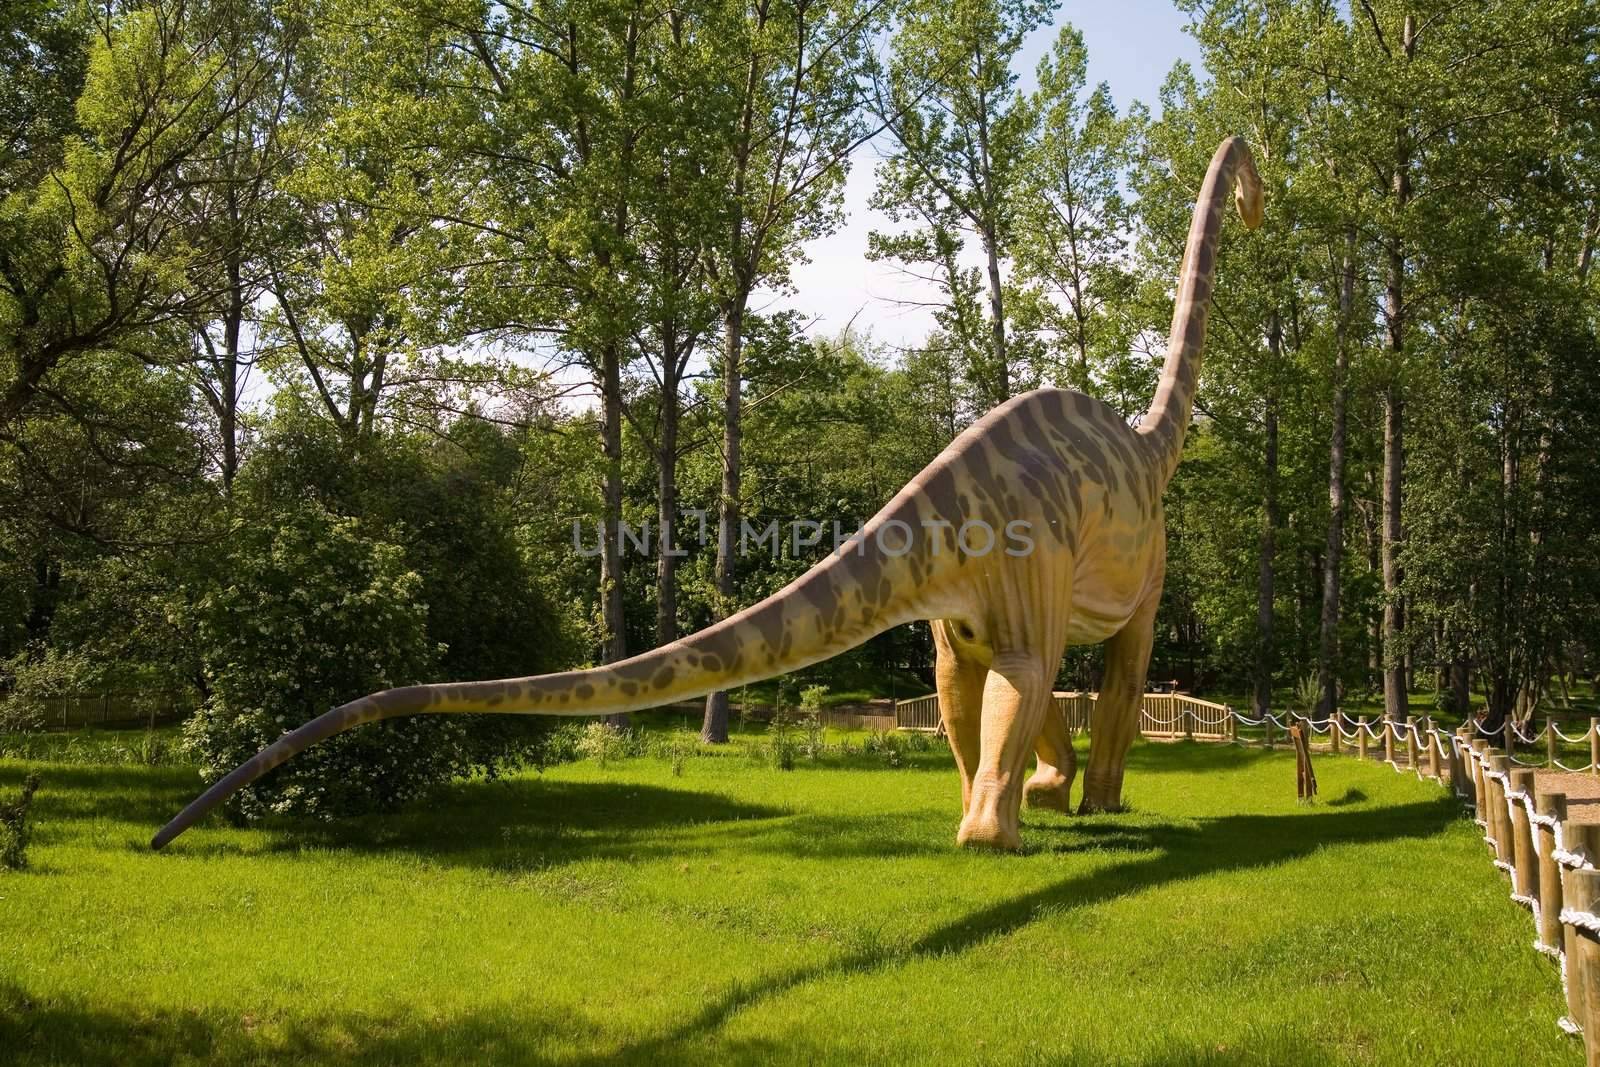 Jurassic park - set of dinosaurs - long body of Mamenchisaurus constructus